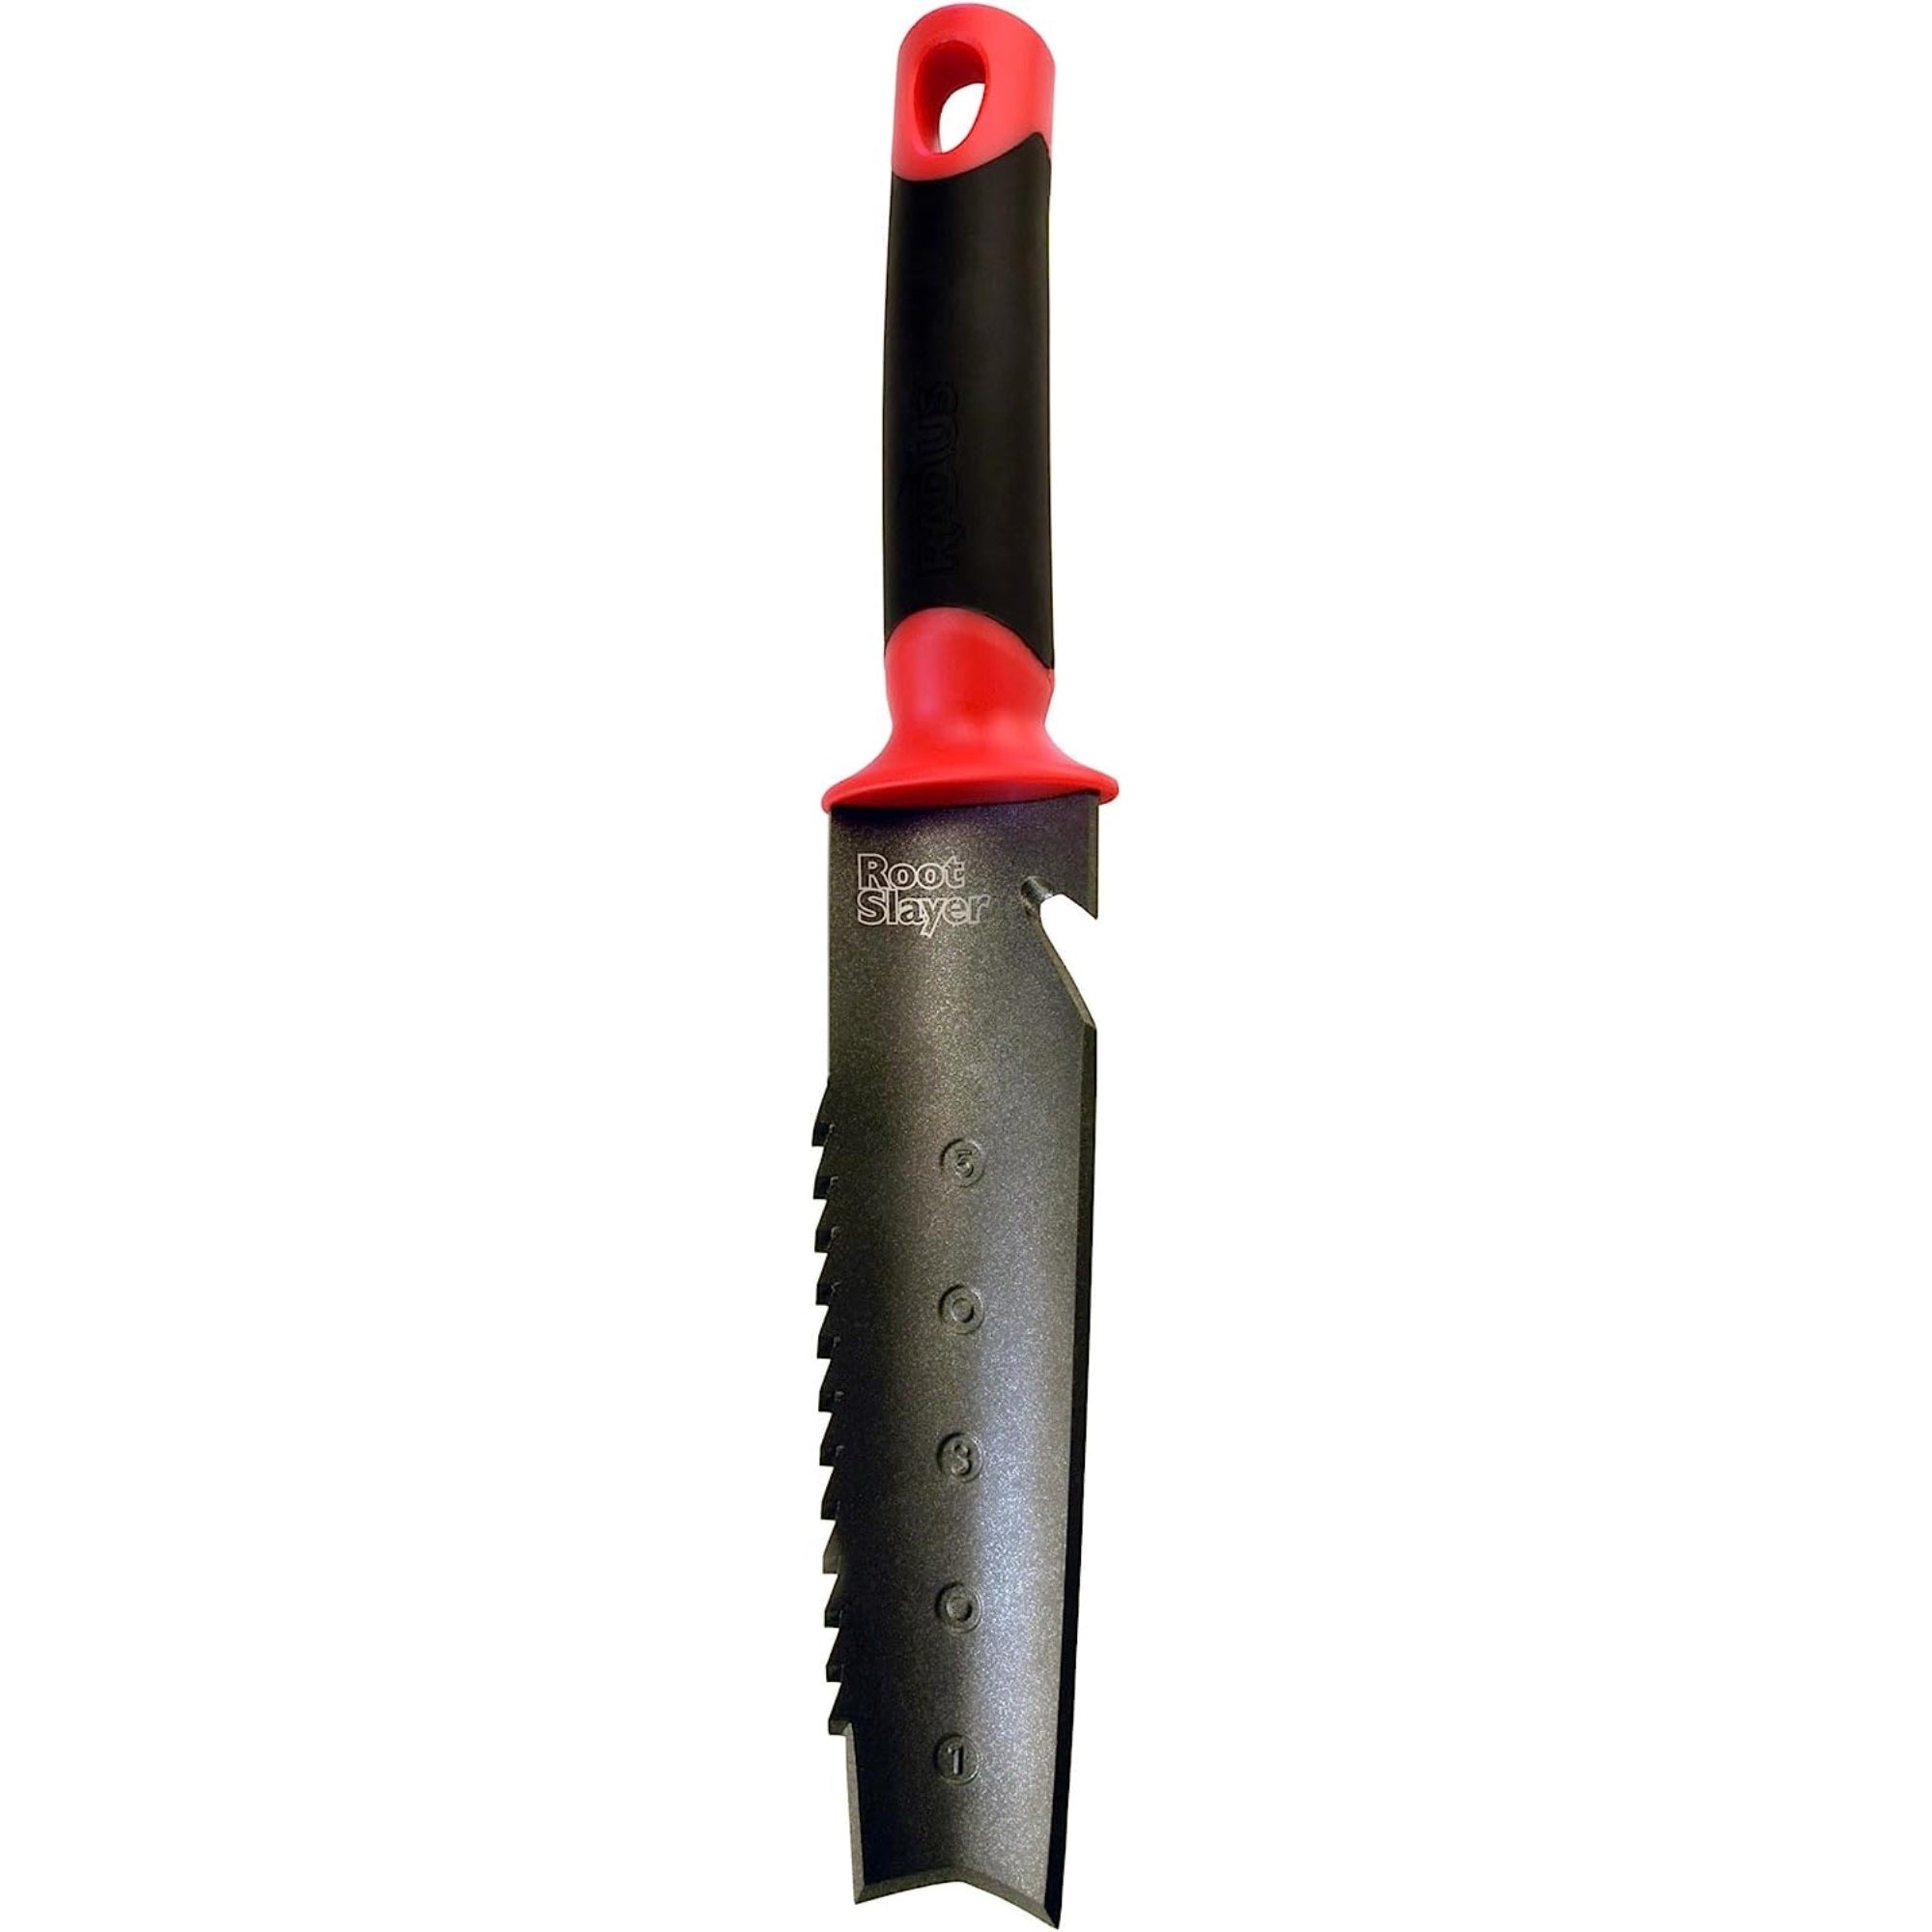 Radius Garden Root Slayer Soil Knife, Carbon Steel Blade, Ergonomic Handle, 7.5" Blade